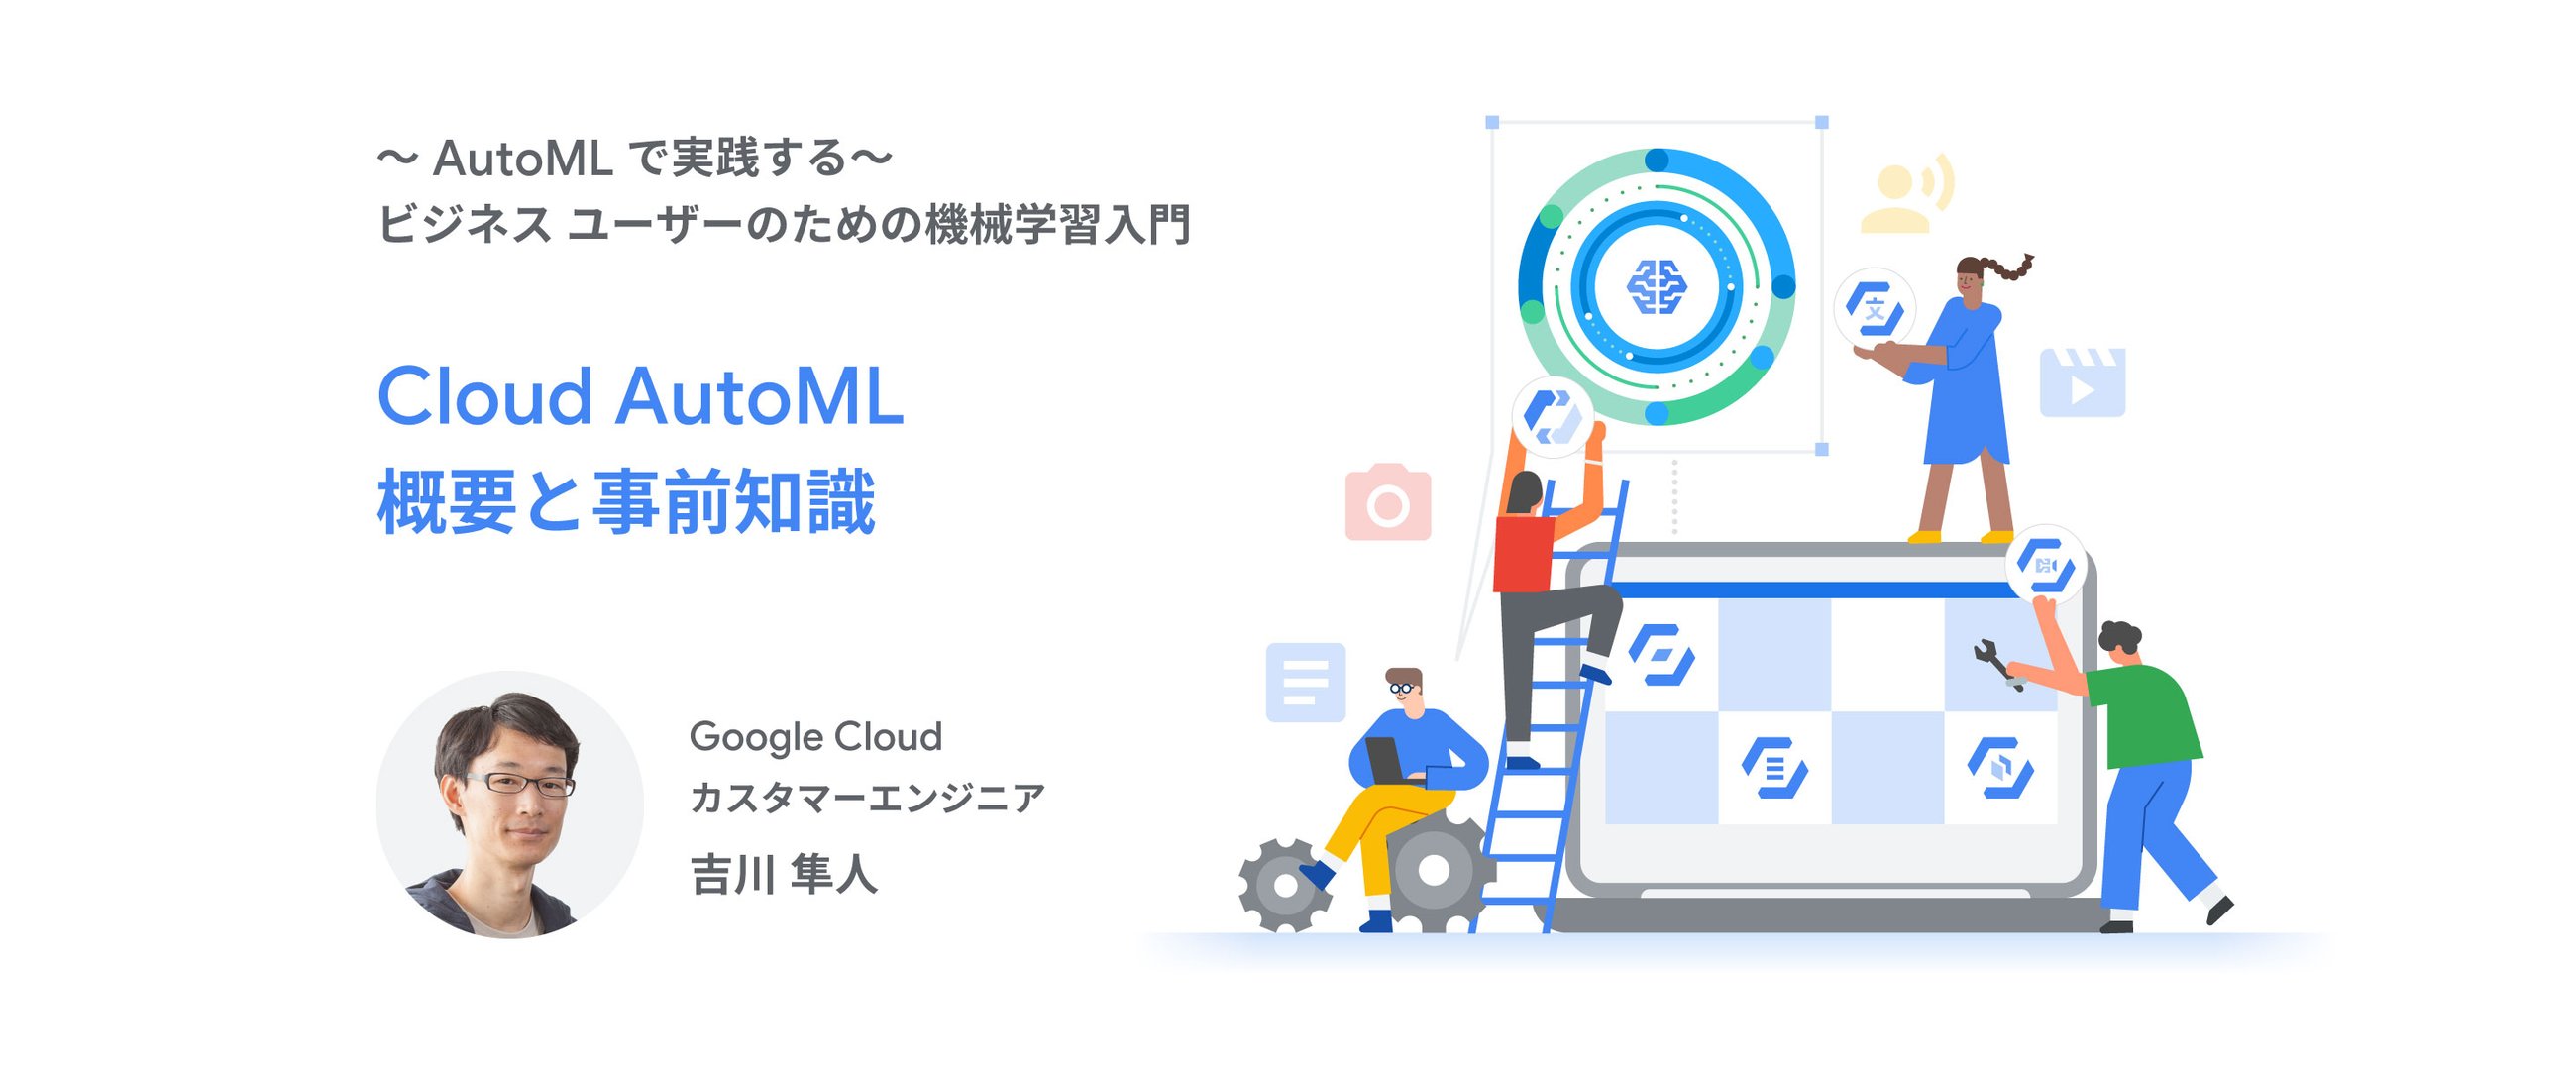 https://storage.googleapis.com/gweb-cloudblog-publish/images/Blog_HERO_IMG-AutoML_01_yoshikawa.max-2600x2600.jpg